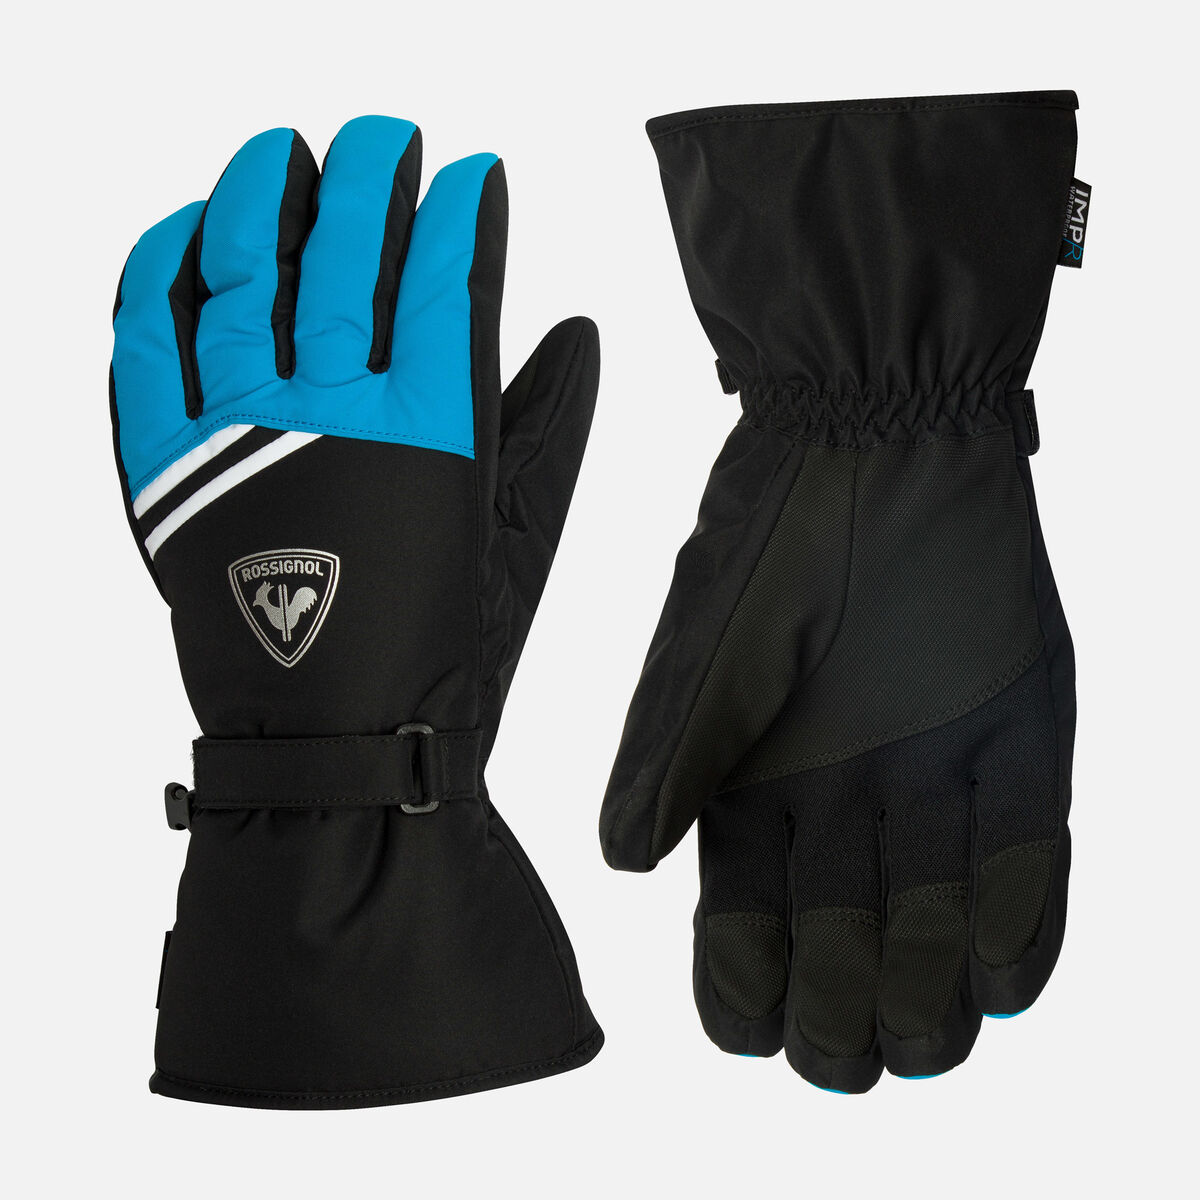 Men's Action Waterproof Ski Gloves